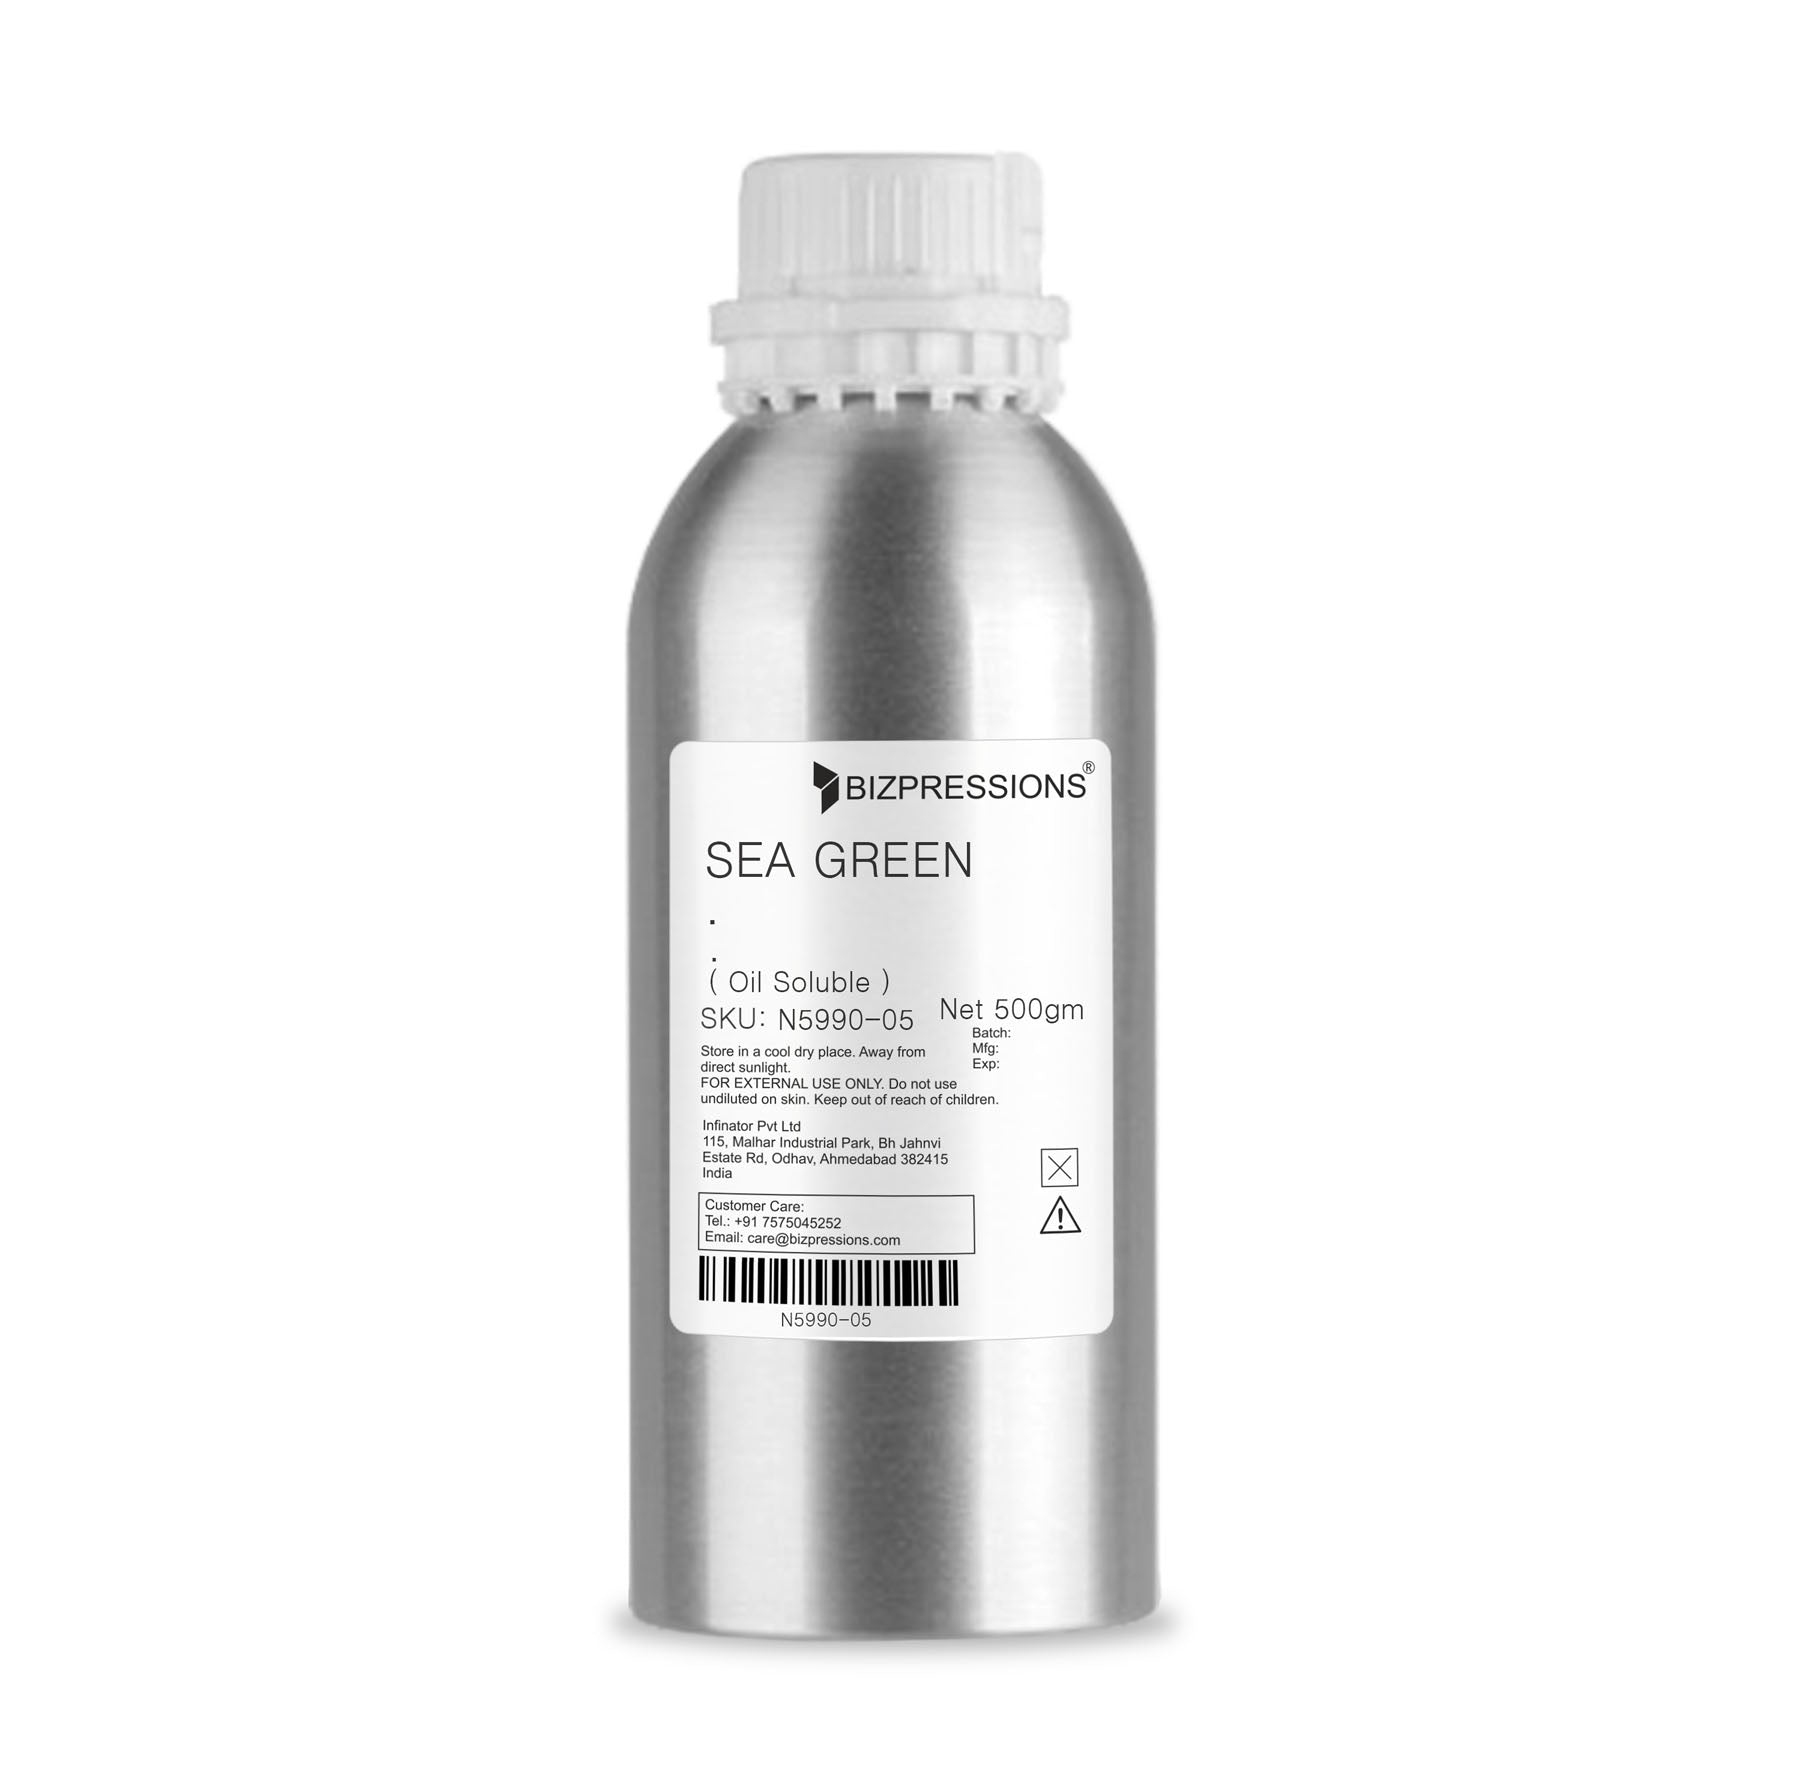 SEA GREEN - Fragrance ( Oil Soluble ) - 500 gm